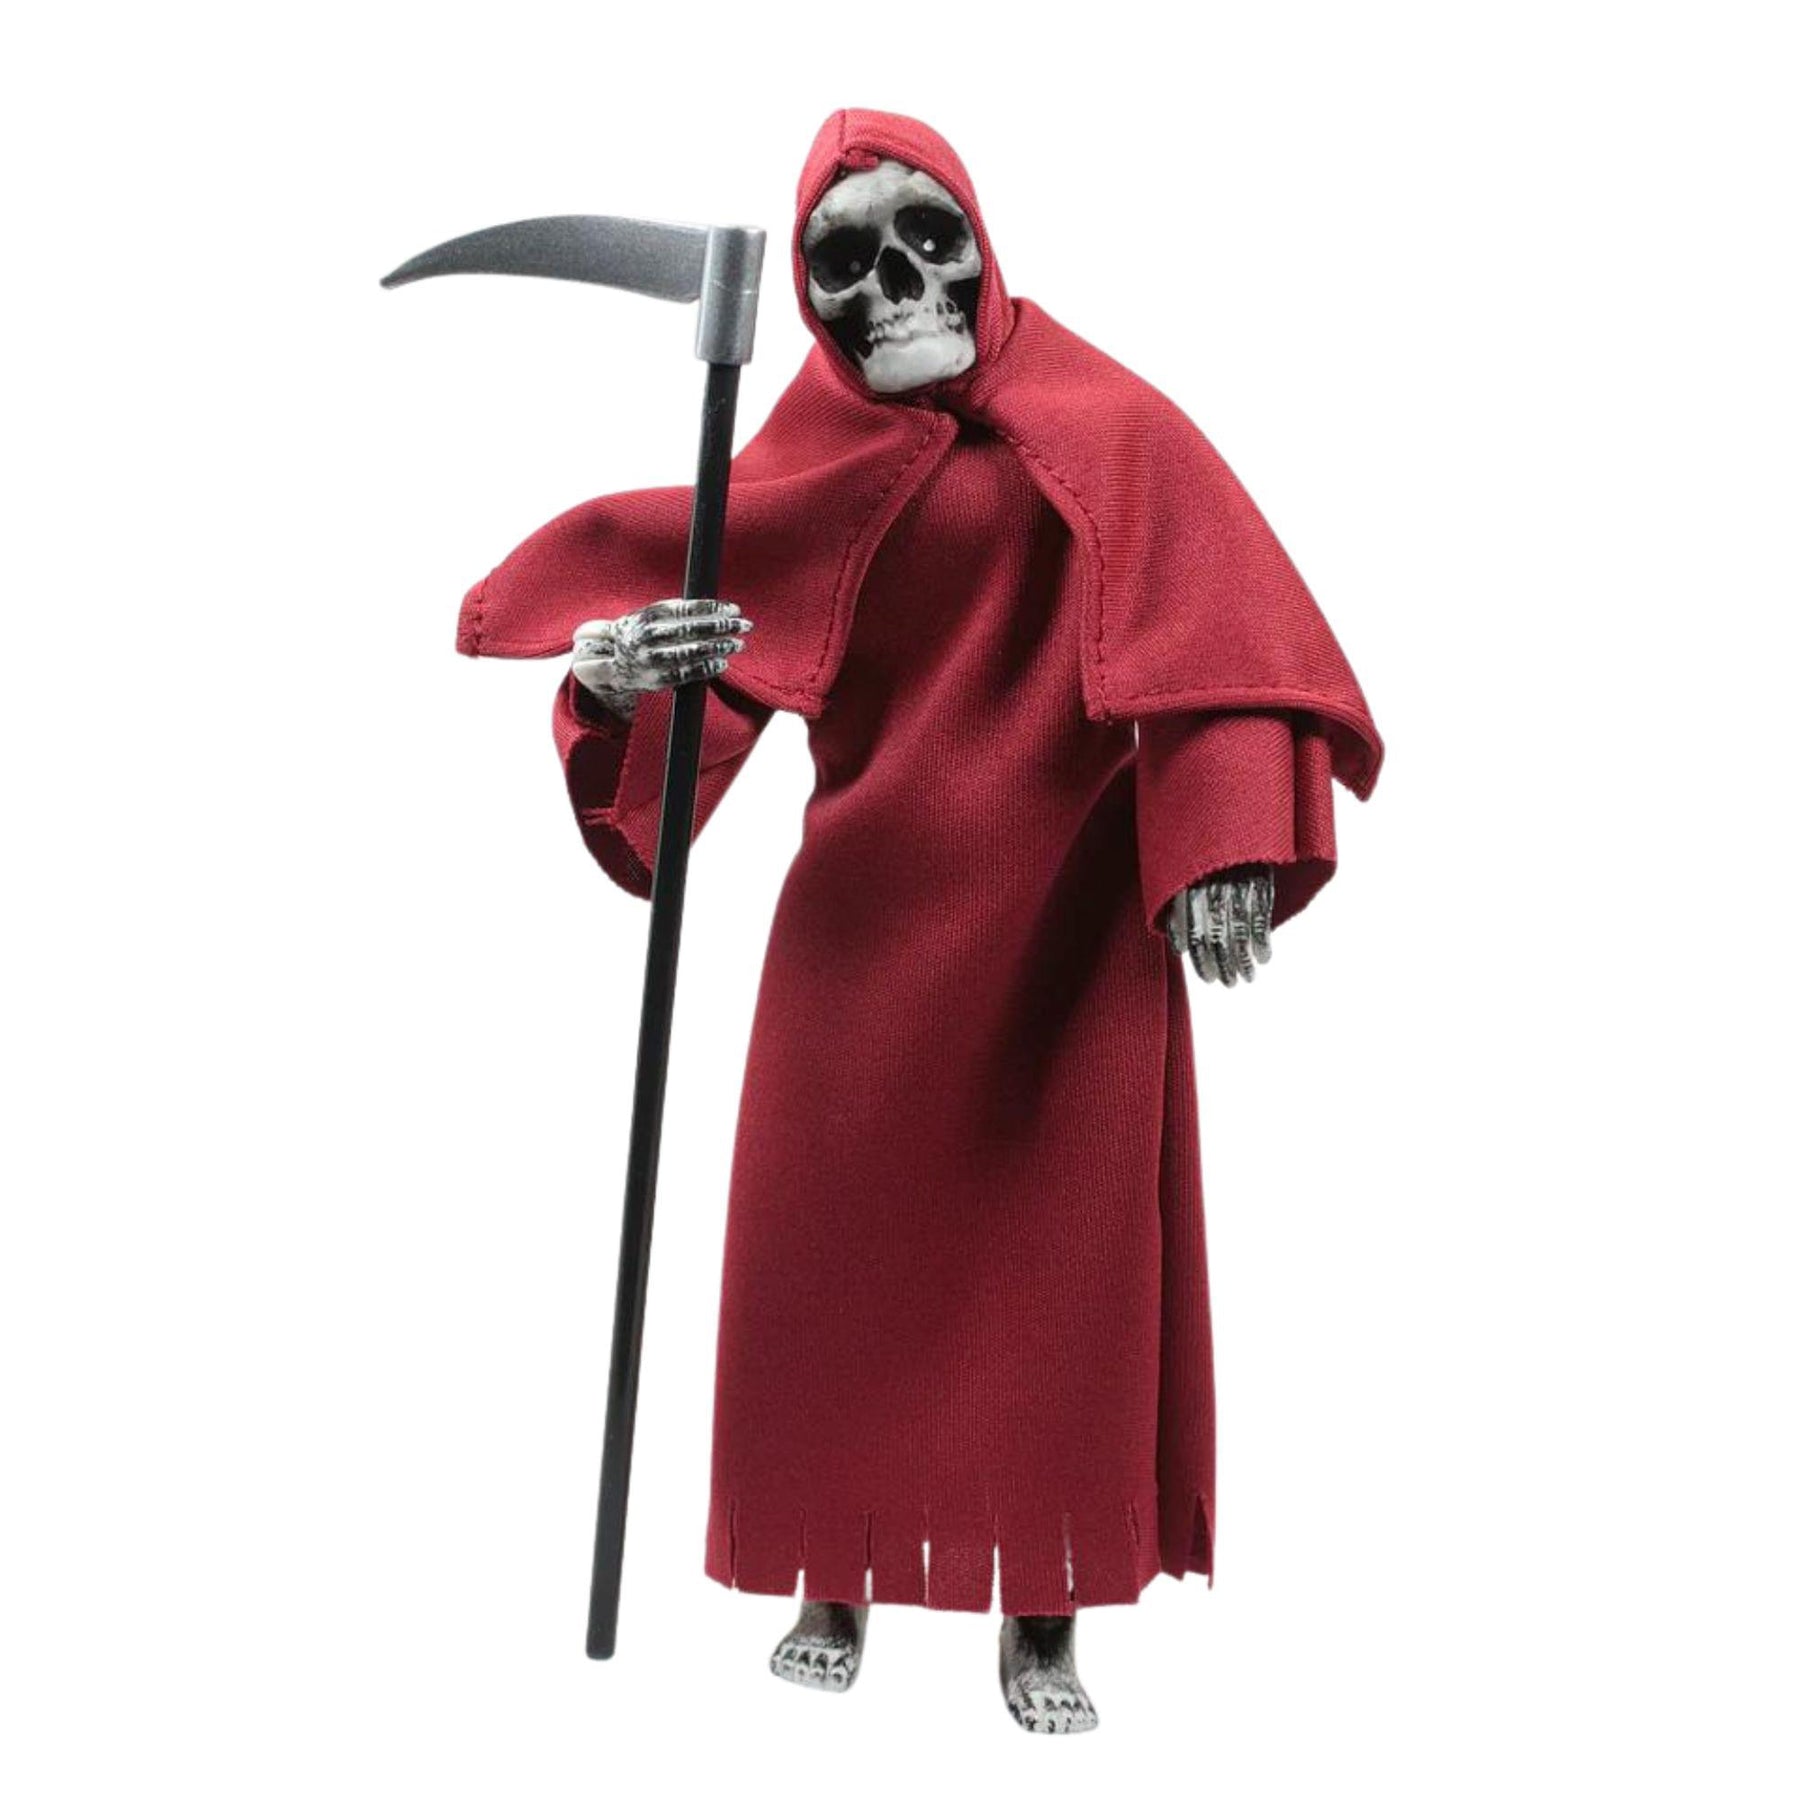 Mego Grim Reaper 8 Inch Action Figure